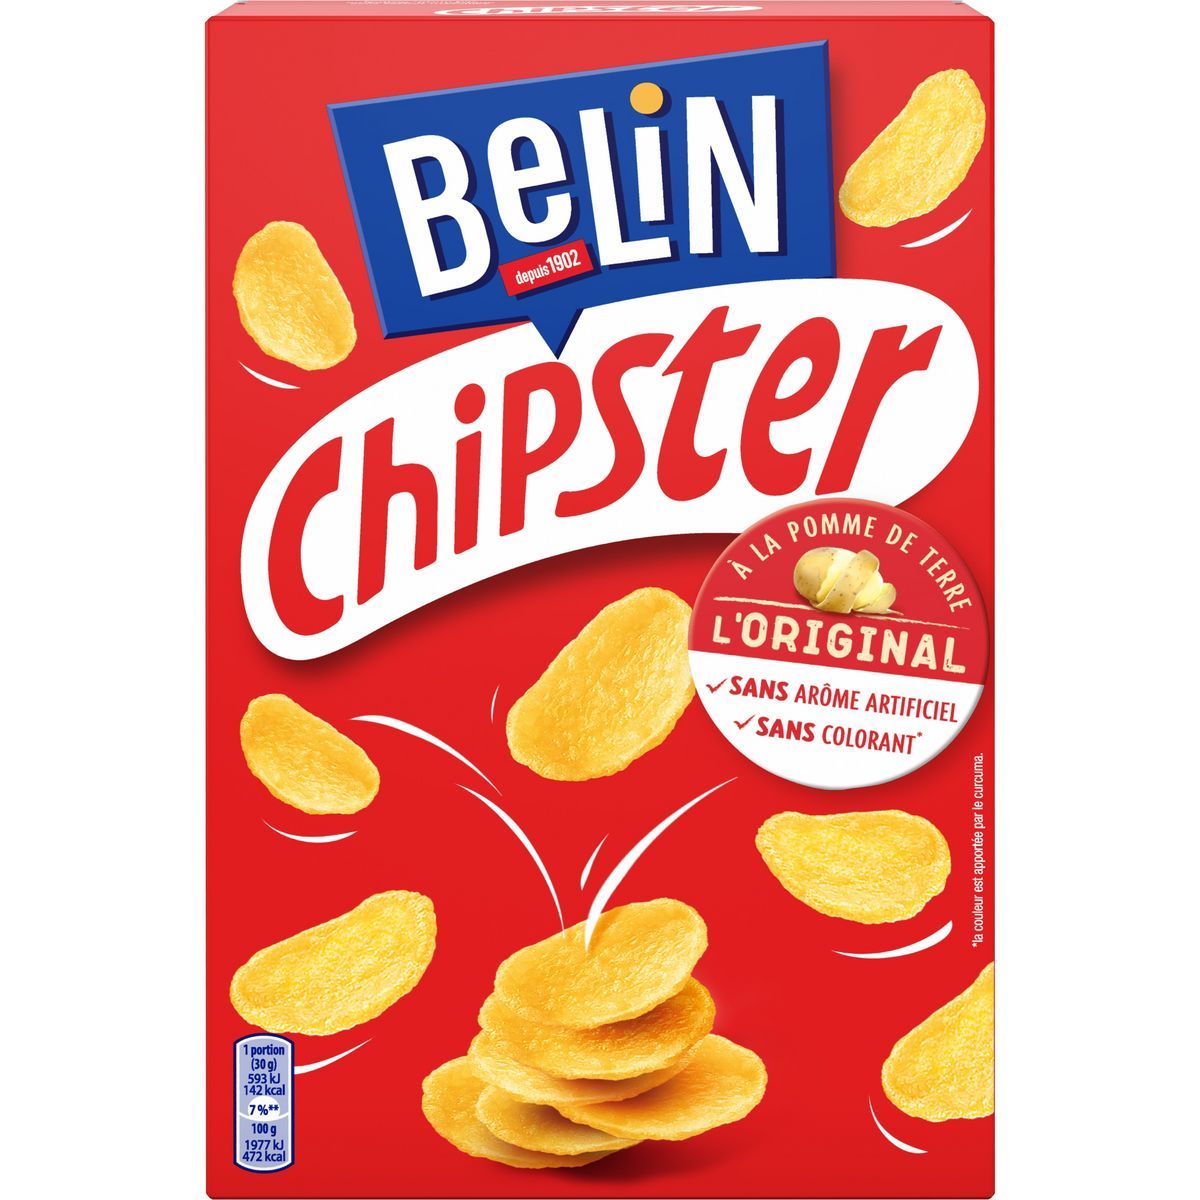 CHIPSTER BELIN